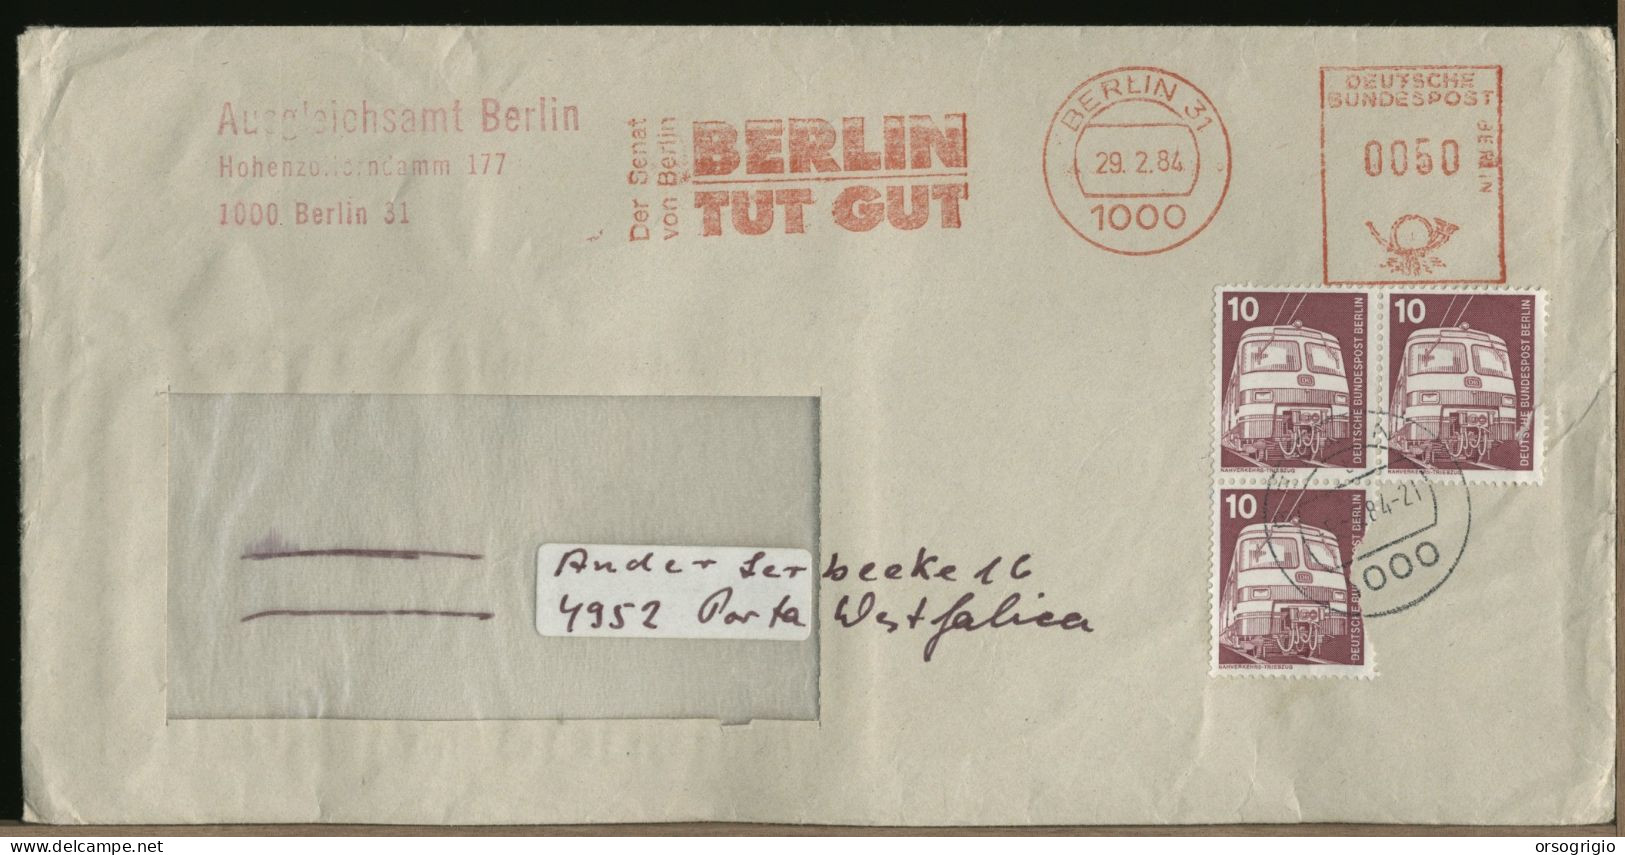 GERMANY - DEUTSCHE - BERLIN - 1984 - TUT GUT - Maschinenstempel (EMA)